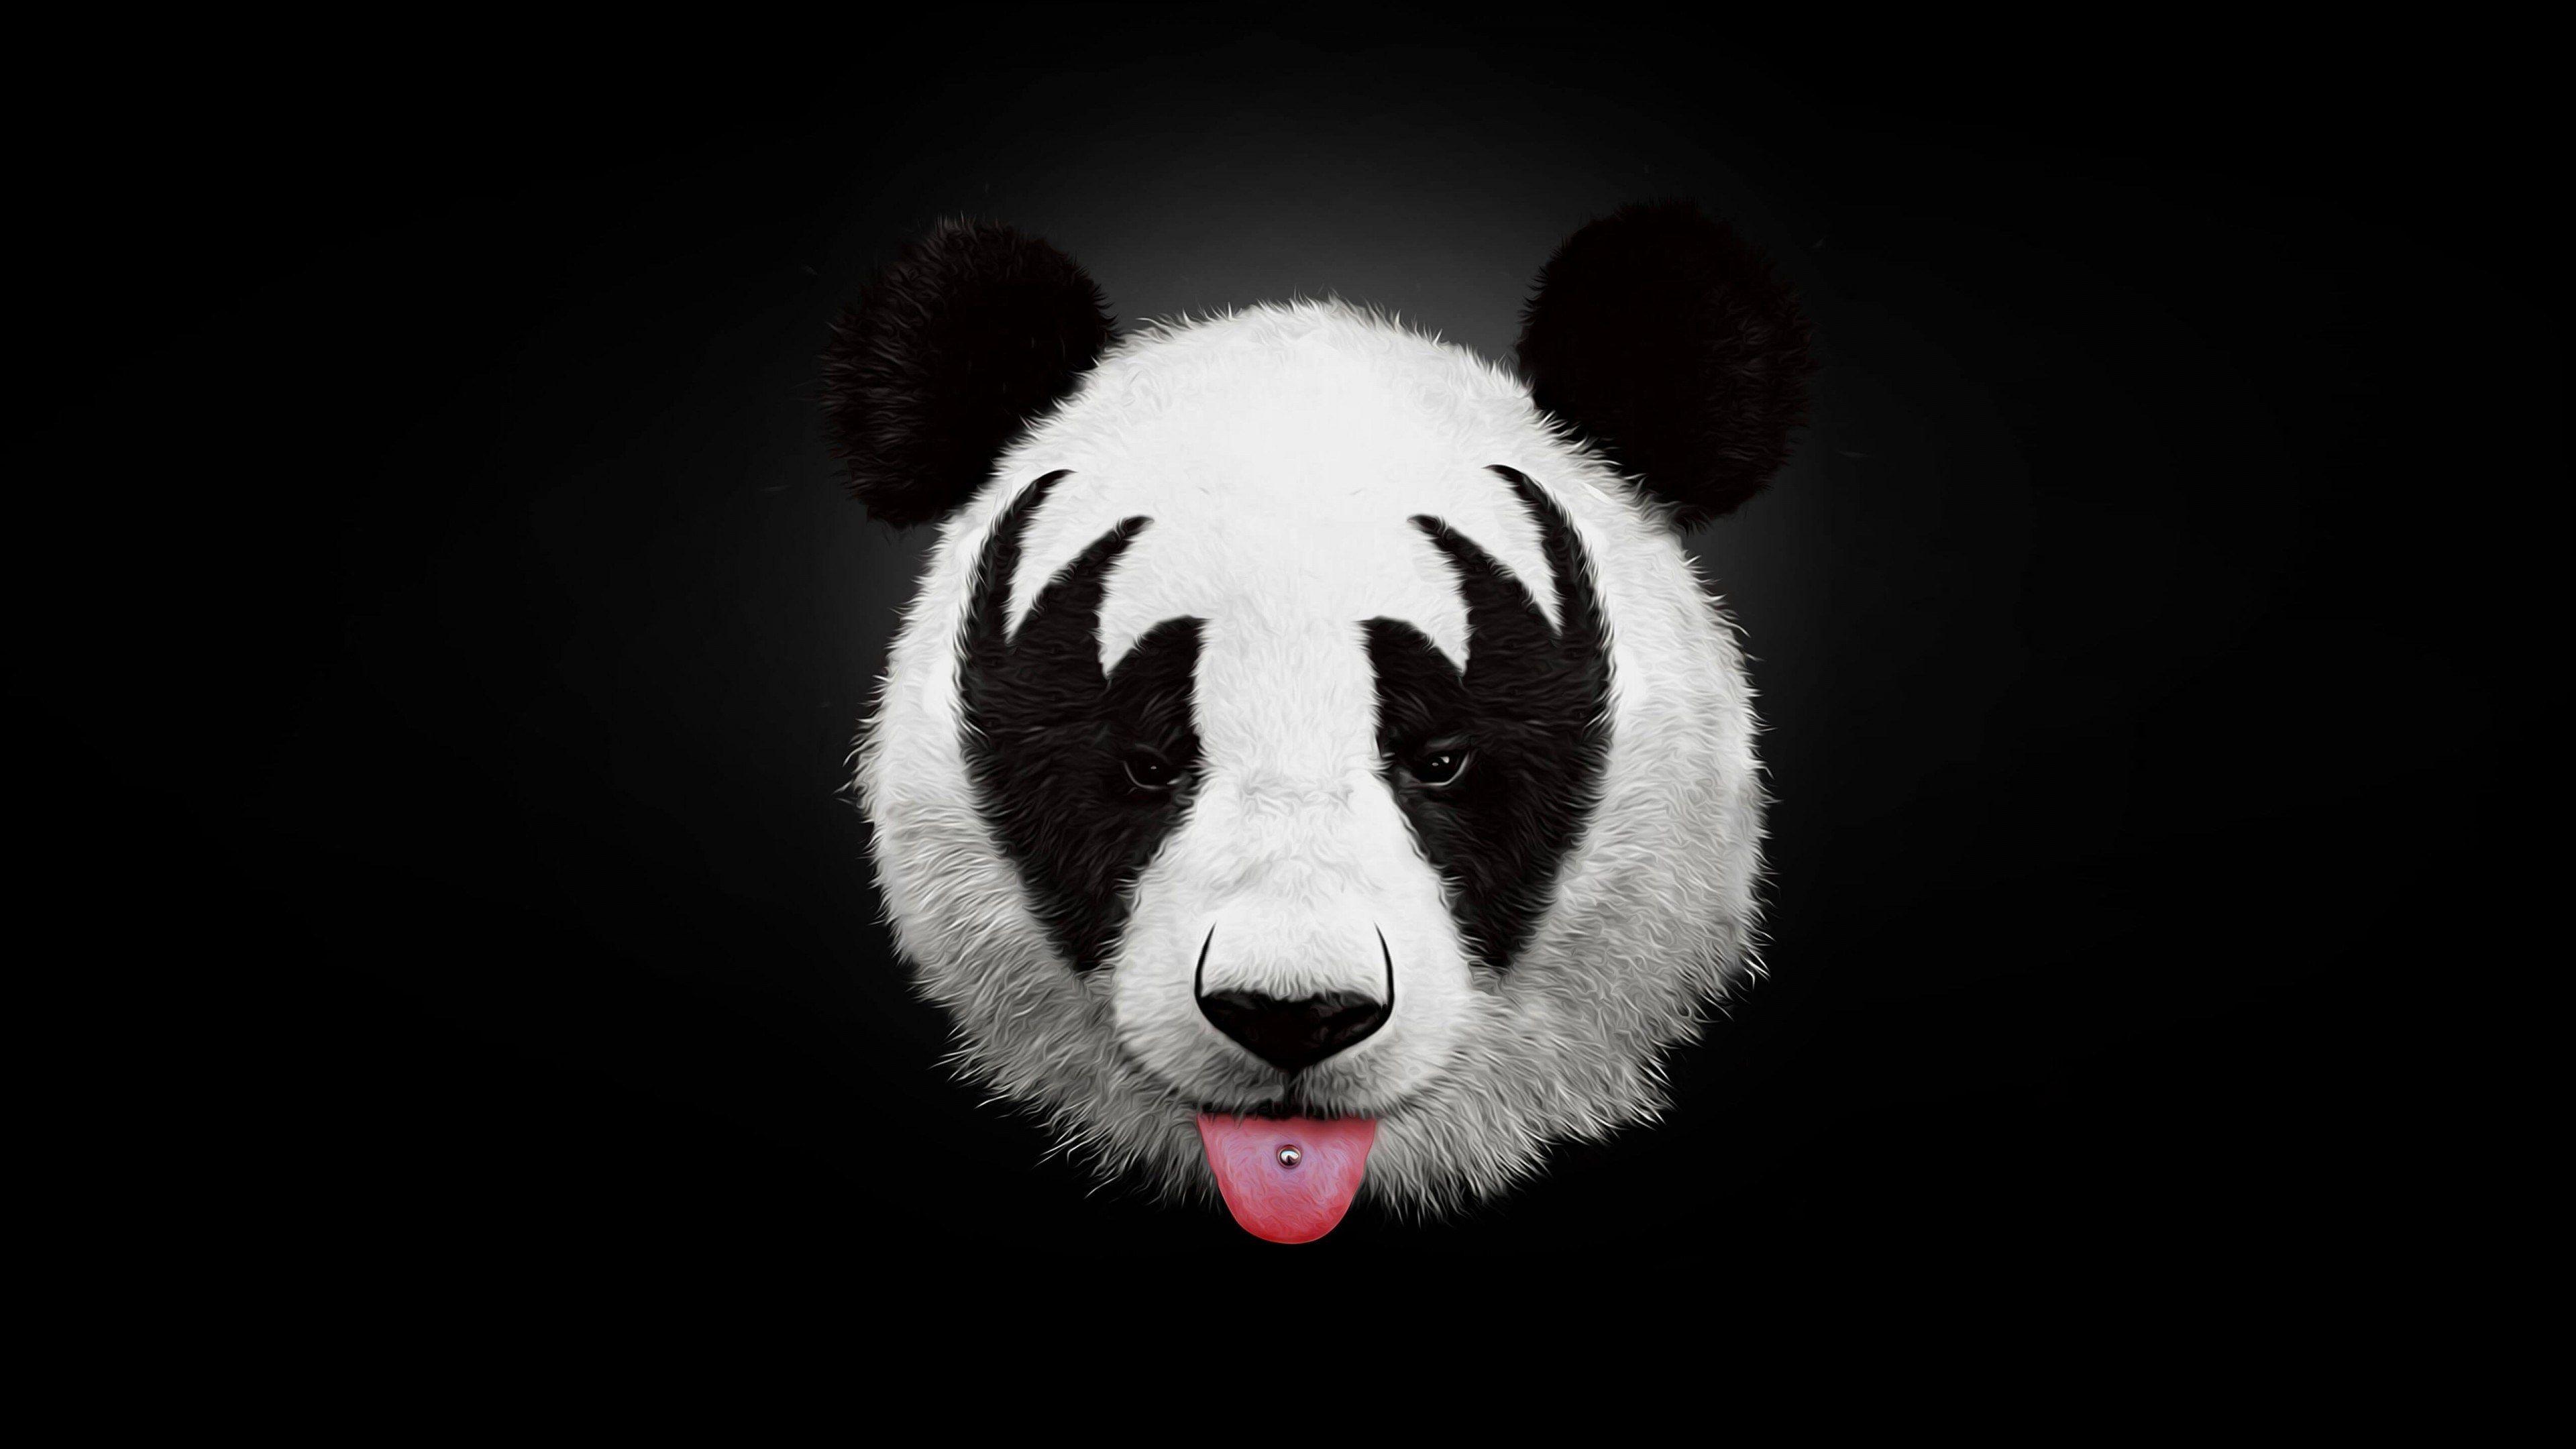 panda 4k desktop background wallpaper HD. Panda wallpaper, Artwork, Typography artwork